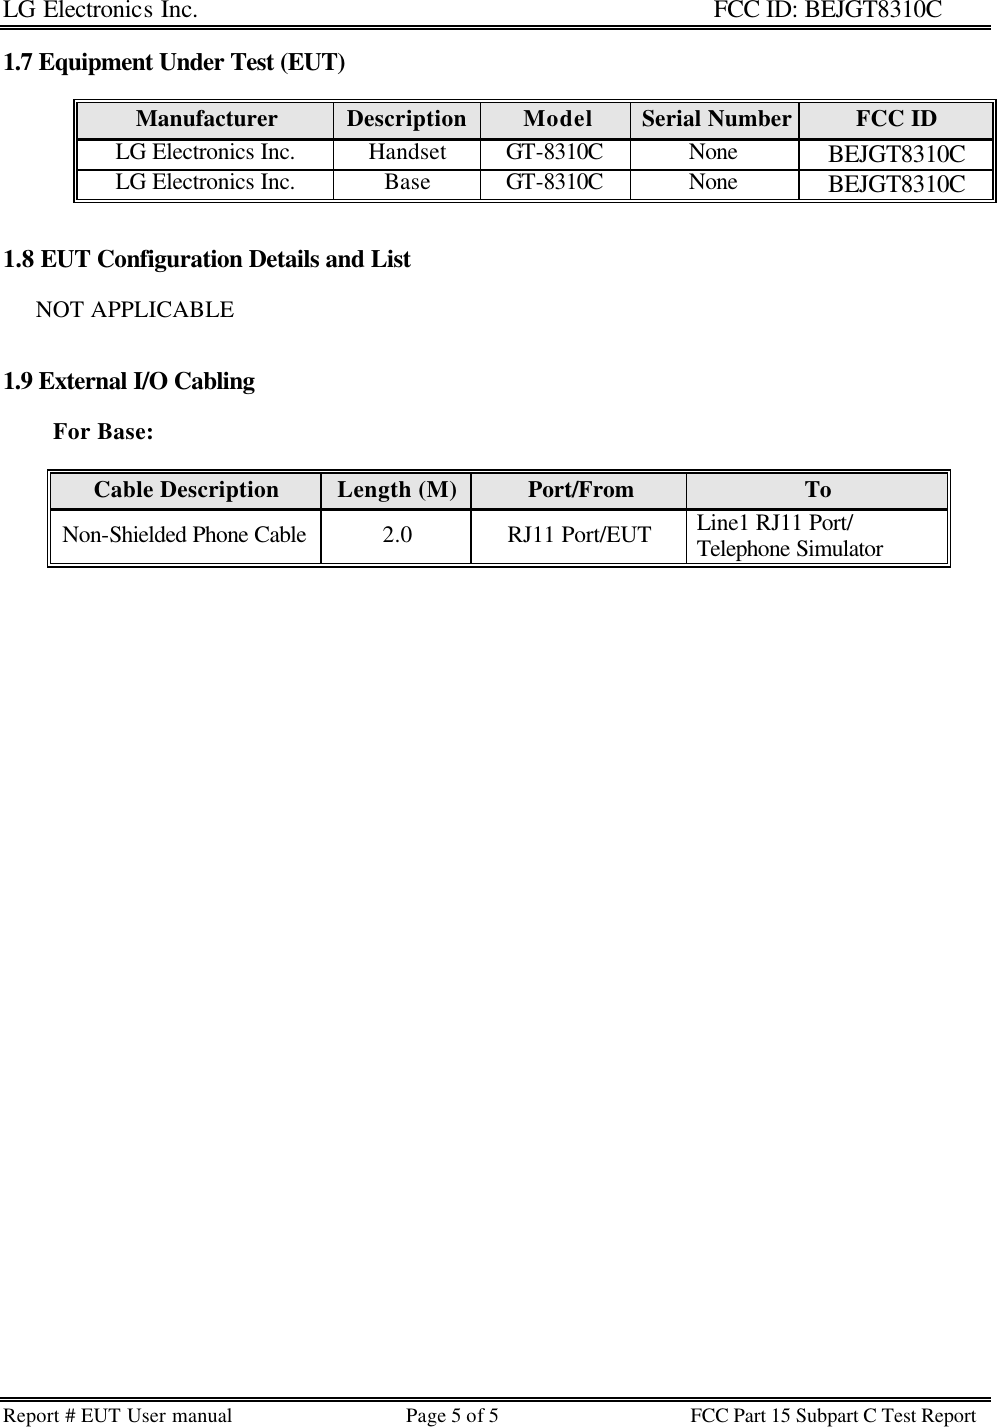 LG Electronics Inc.                                                                                                   FCC ID: BEJGT8310C Report # EUT User manual Page 5 of 5 FCC Part 15 Subpart C Test Report   1.7 Equipment Under Test (EUT)  Manufacturer Description Model Serial Number FCC ID LG Electronics Inc. Handset GT-8310C None BEJGT8310C LG Electronics Inc. Base GT-8310C None BEJGT8310C   1.8 EUT Configuration Details and List         NOT APPLICABLE   1.9 External I/O Cabling                       For Base:   Cable Description Length (M) Port/From To Non-Shielded Phone Cable 2.0 RJ11 Port/EUT Line1 RJ11 Port/ Telephone Simulator    